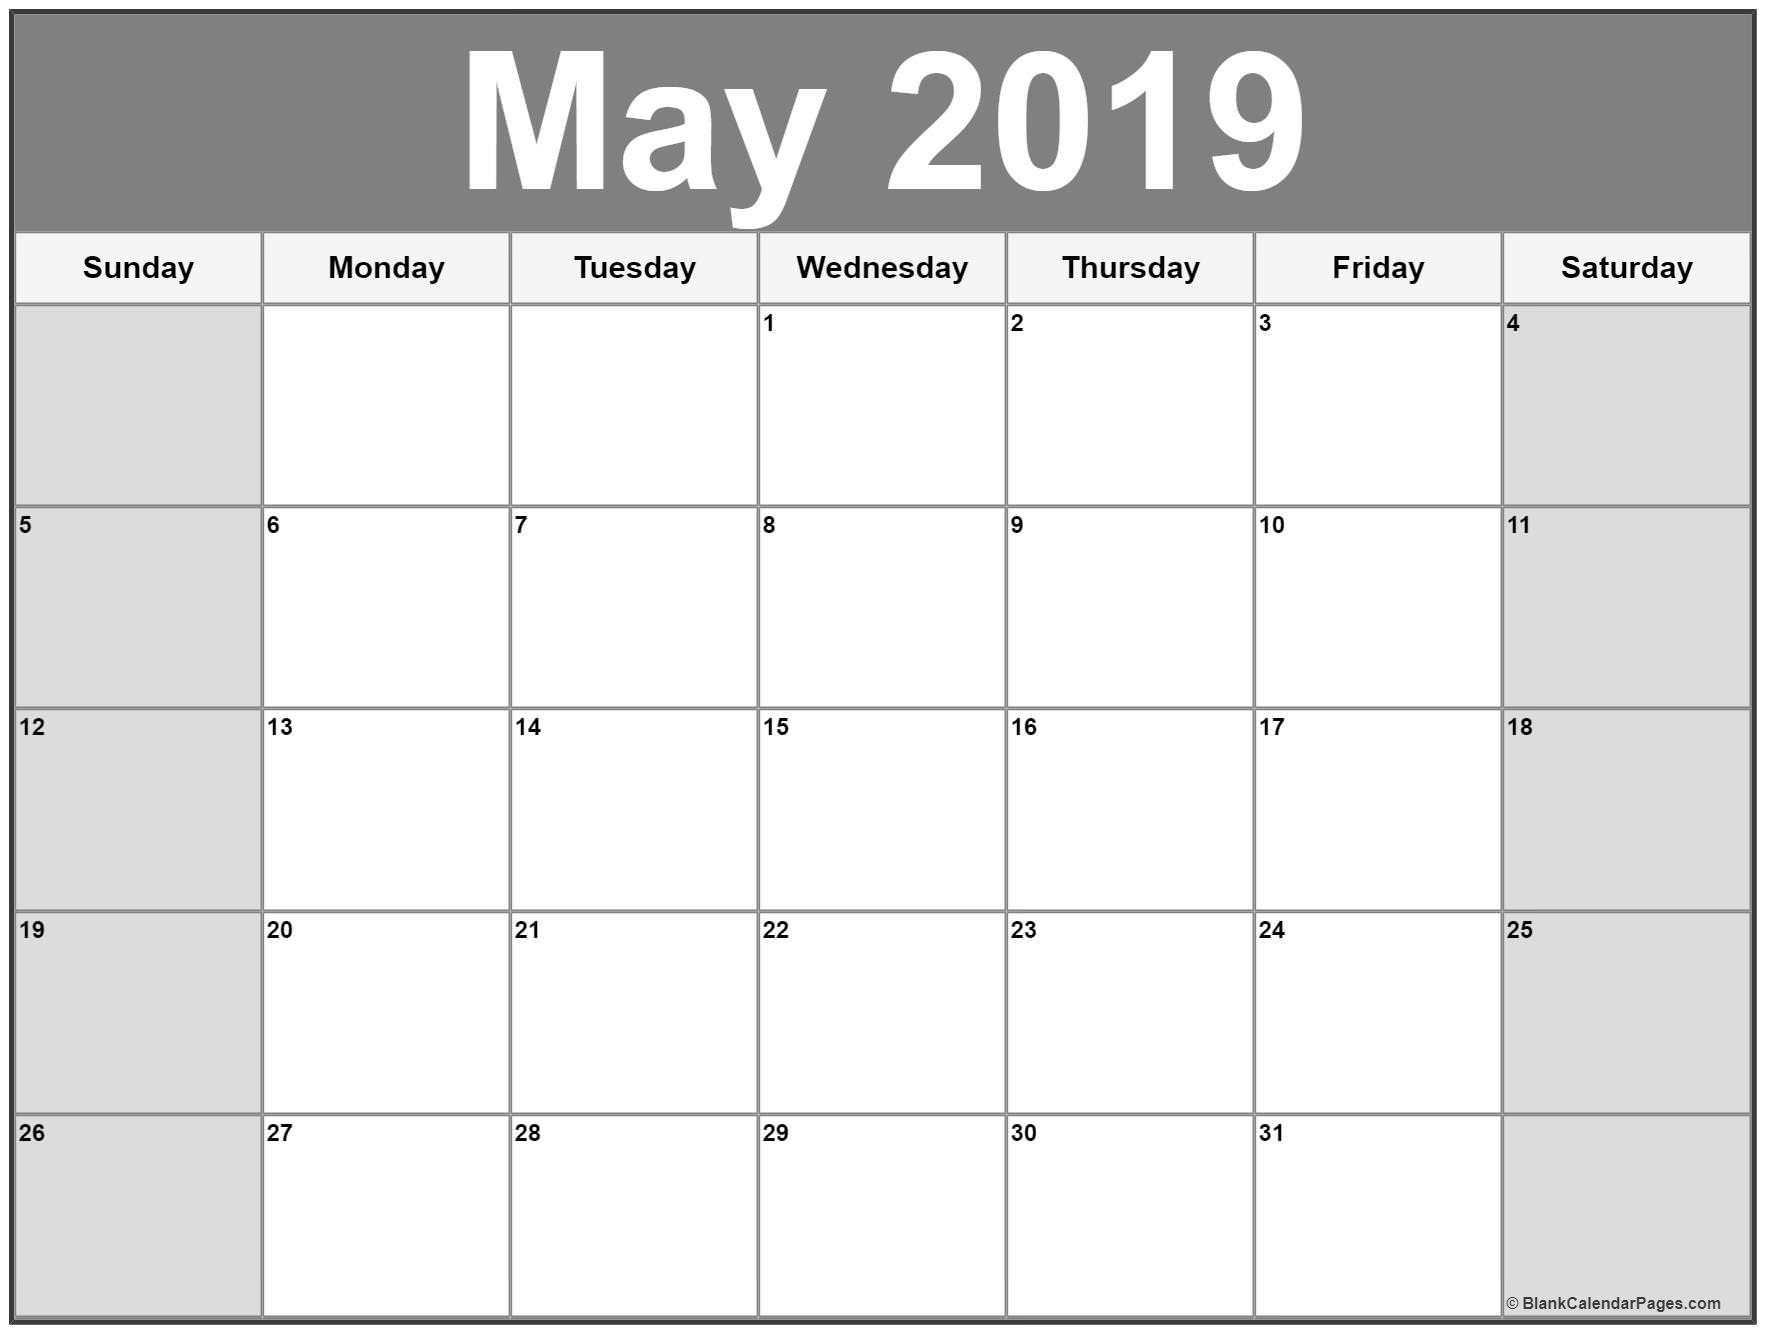 May 2019 Calendar | Free Printable Monthly Calendars Dashing Printable Monthly Calendar With No Weekends